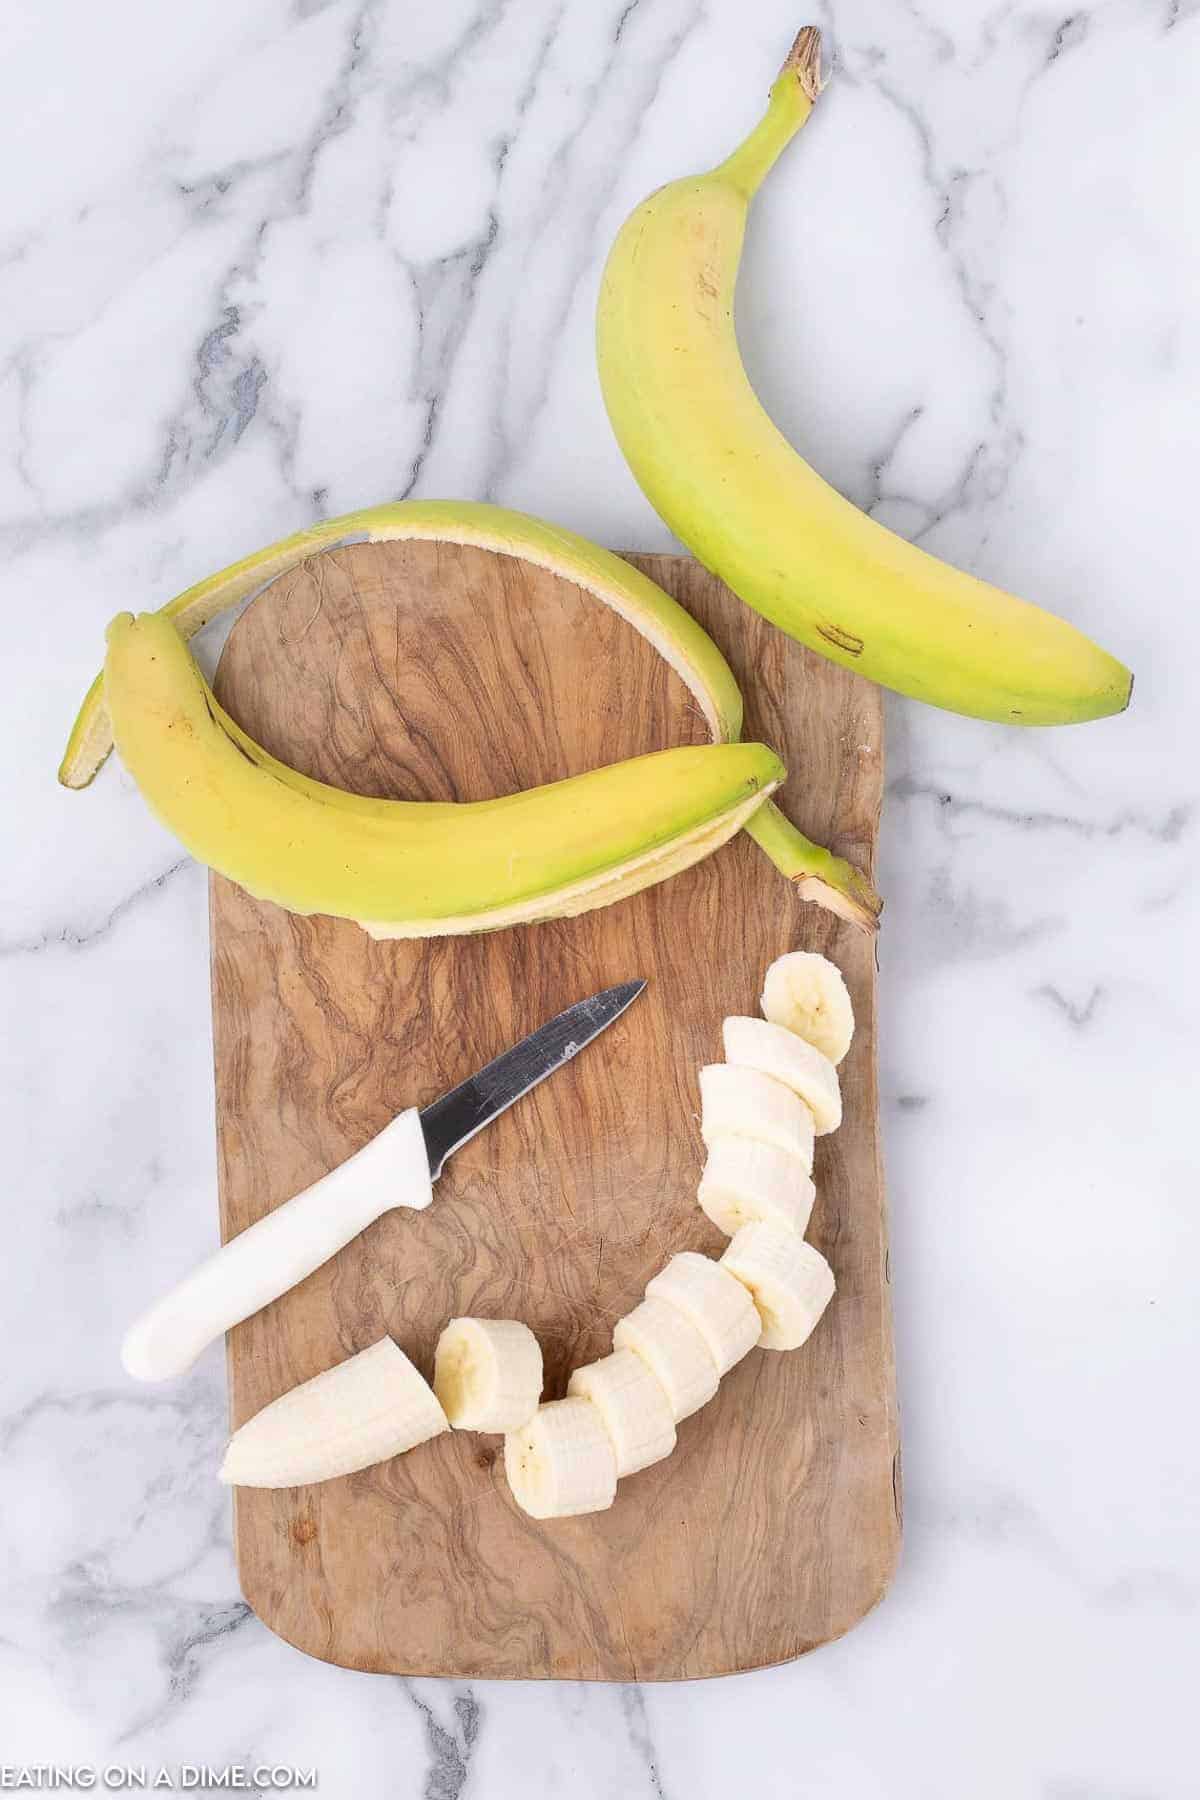 Slice bananas on a cutting board